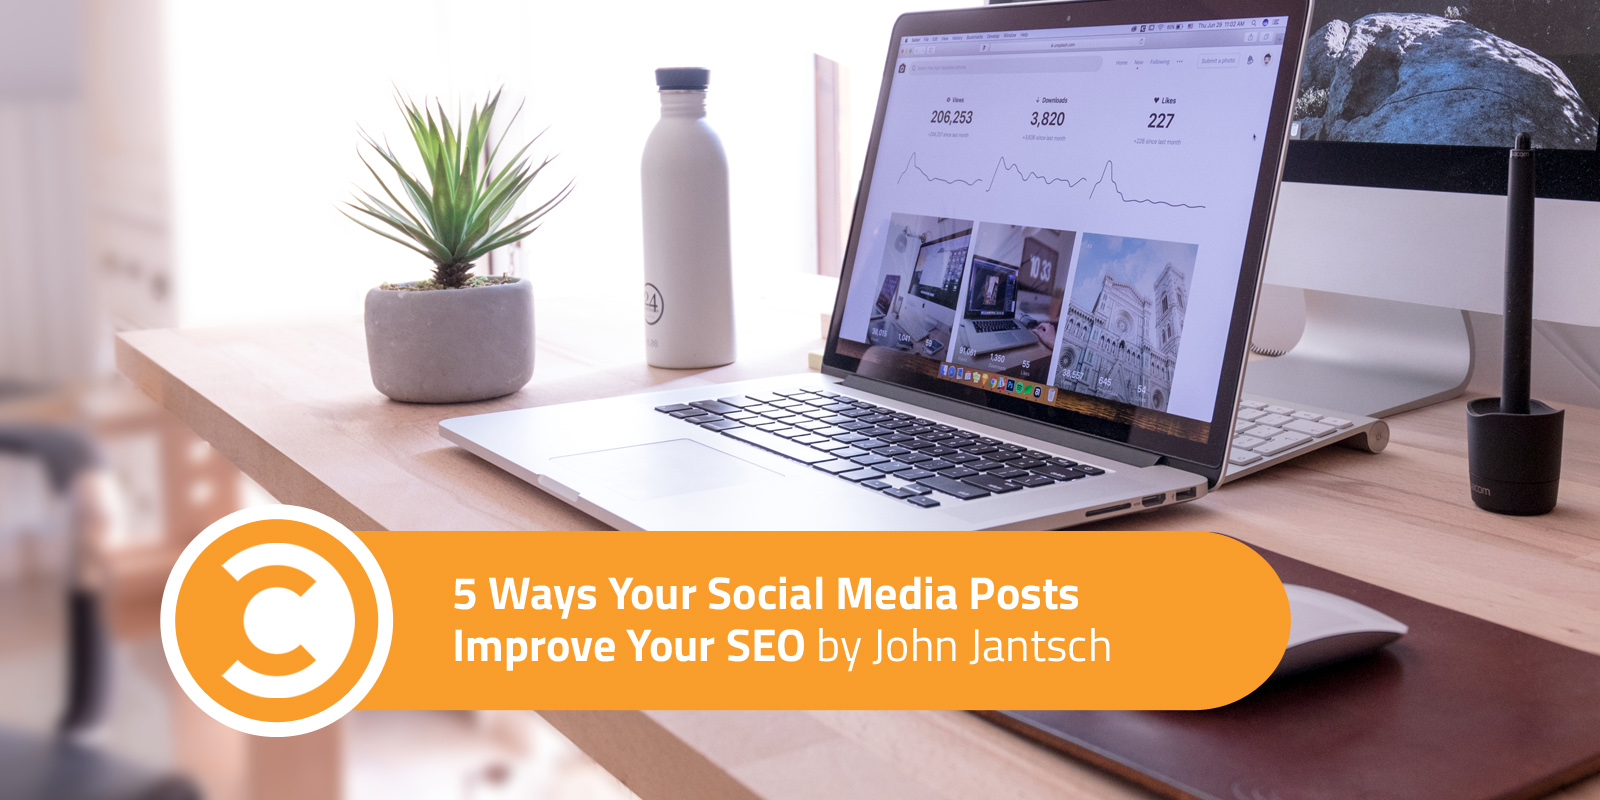 5 Ways Your Social Media Posts Improve Your SEO